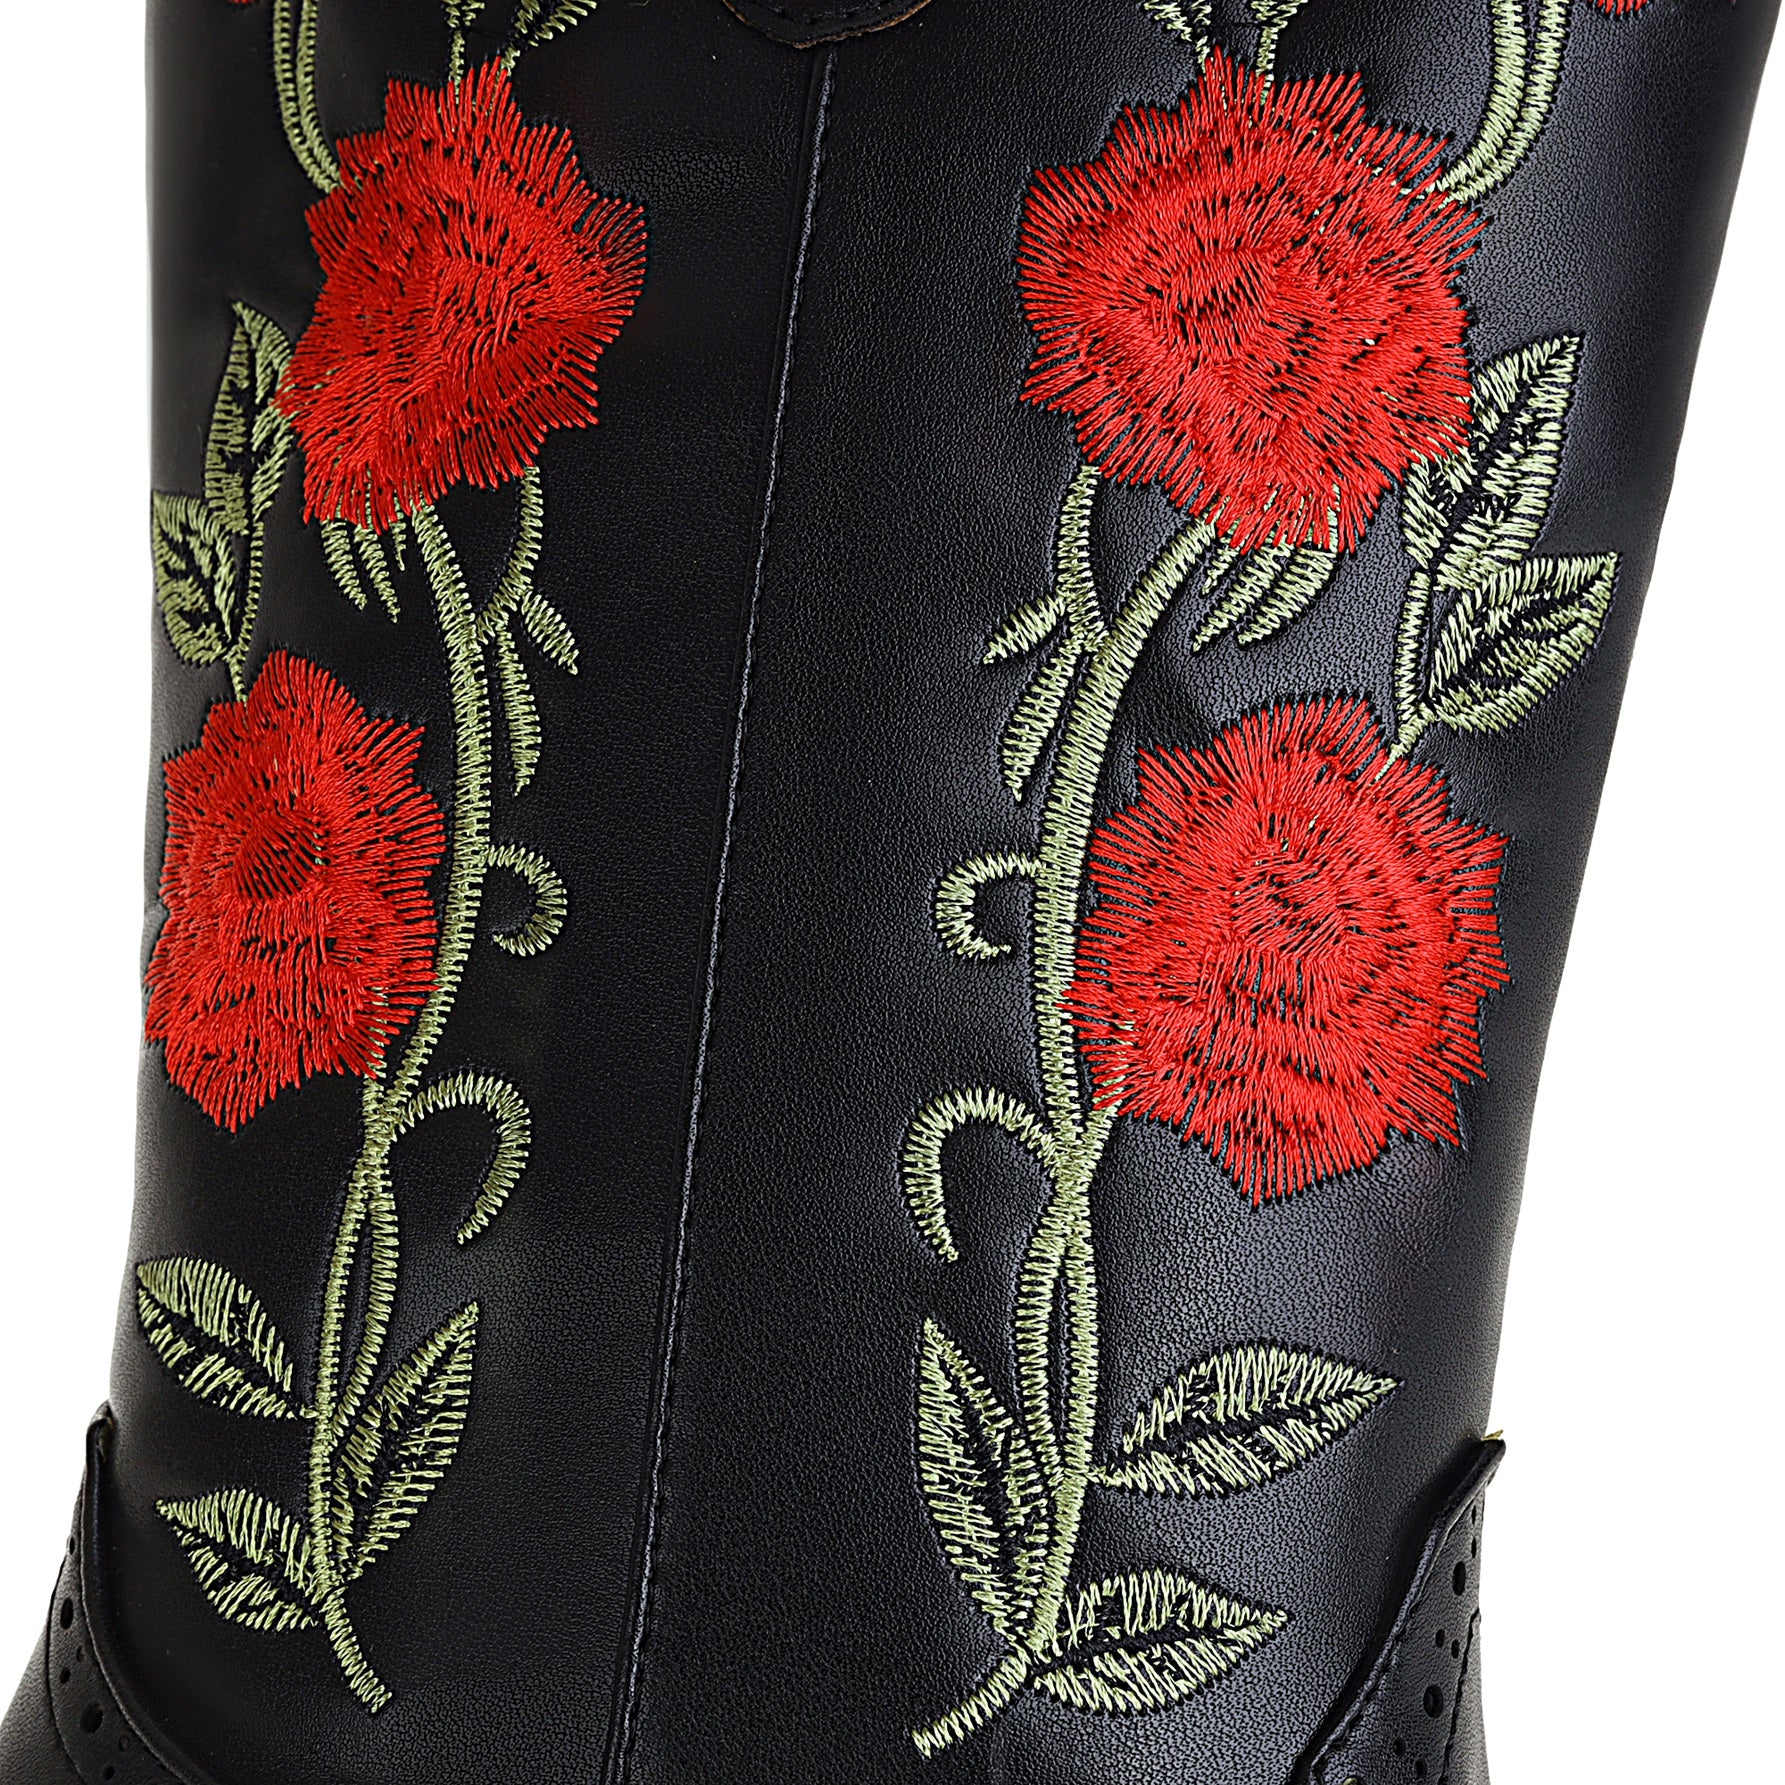 Bigsizeheels Western vintage flowers embroidered boots - Black freeshipping - bigsizeheel®-size5-size15 -All Plus Sizes Available!